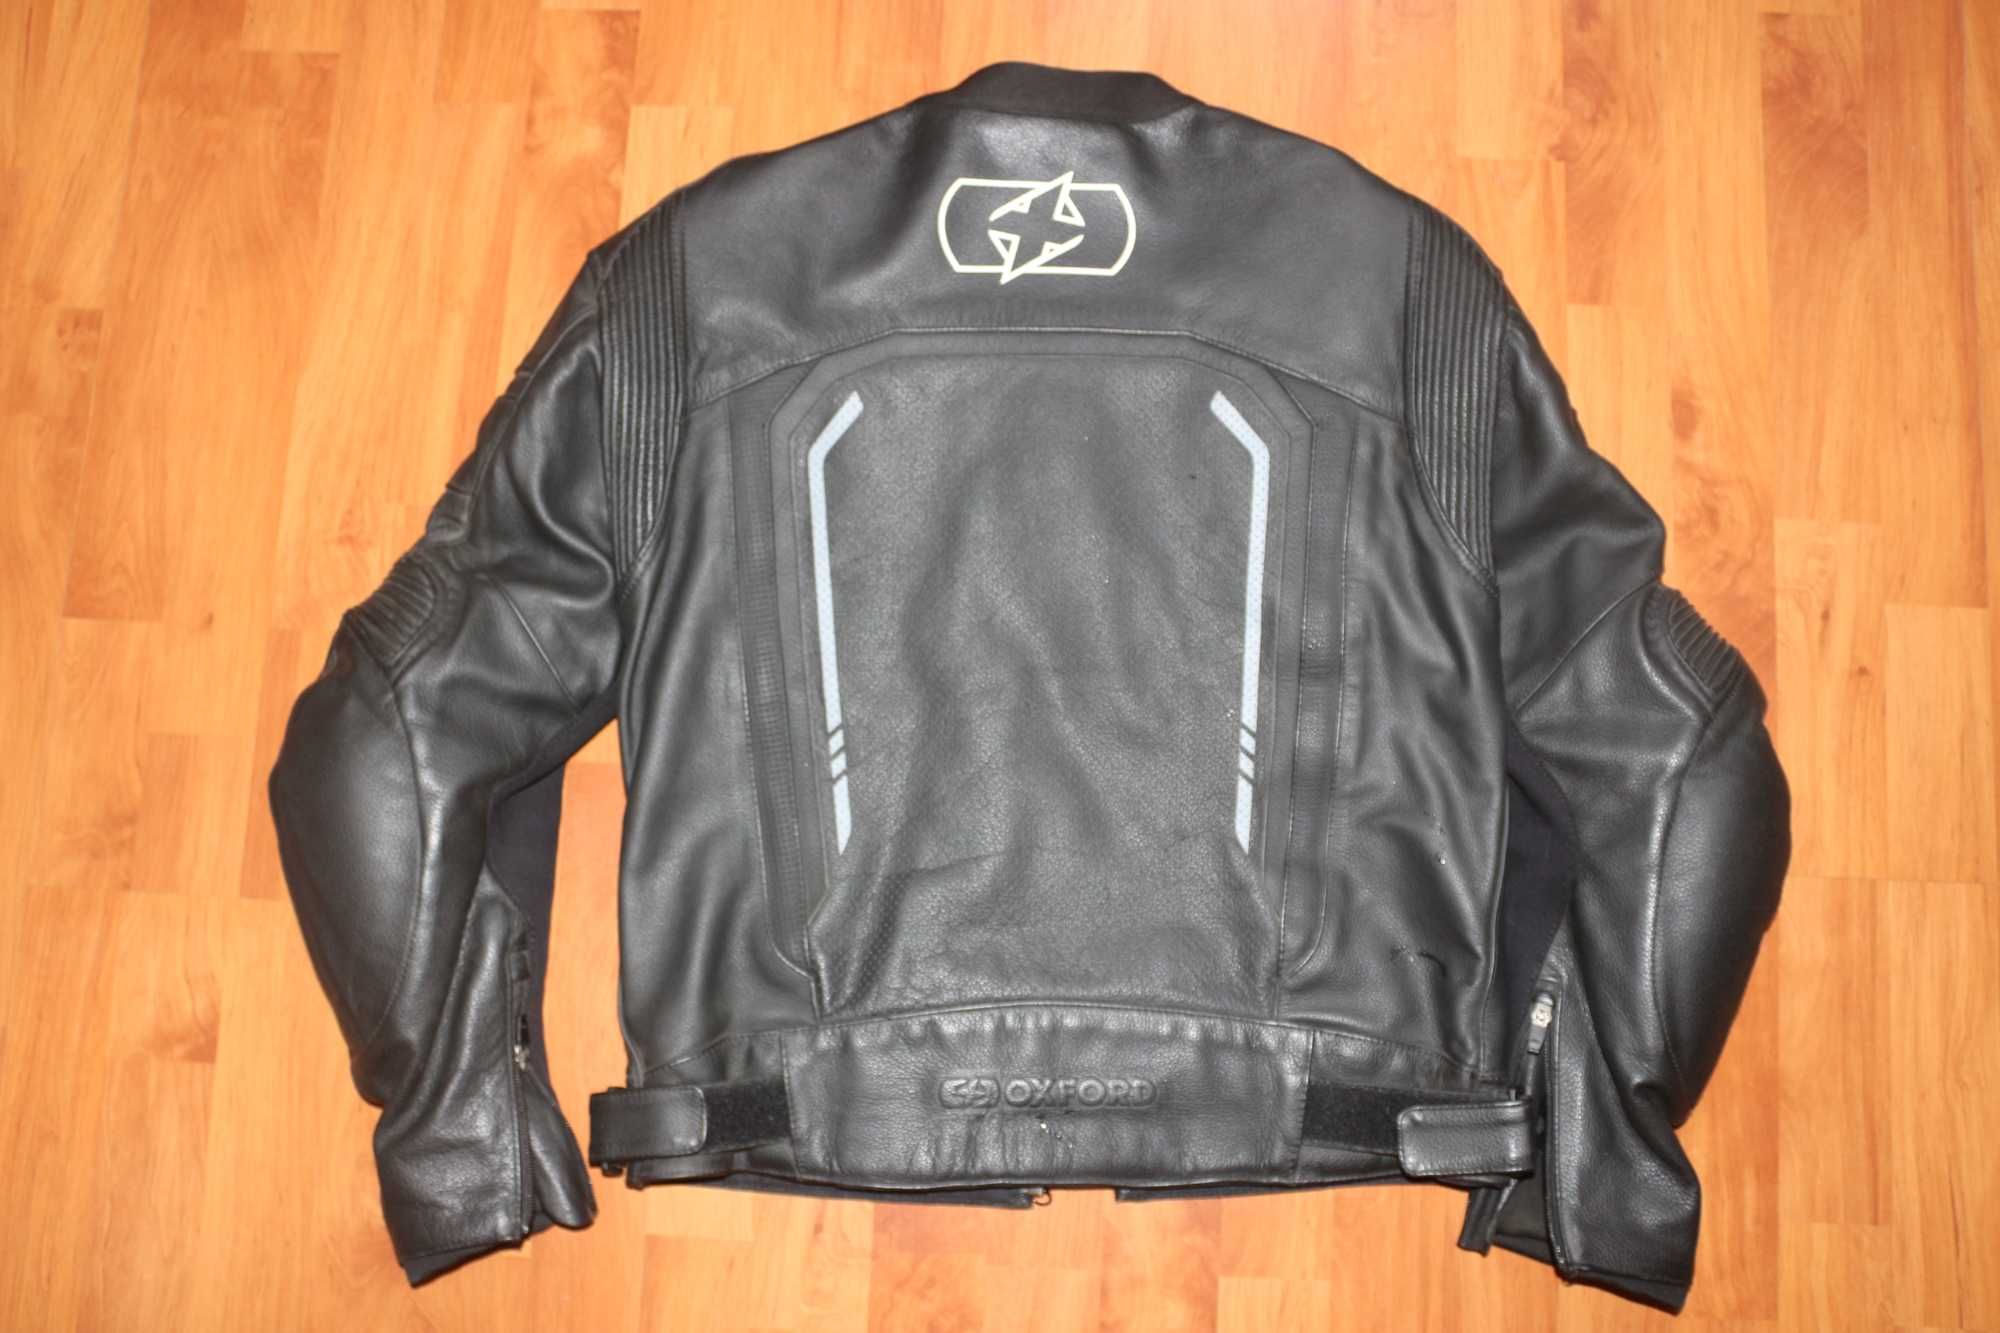 Oxford Strada motorcycle jacket (marime M 40)